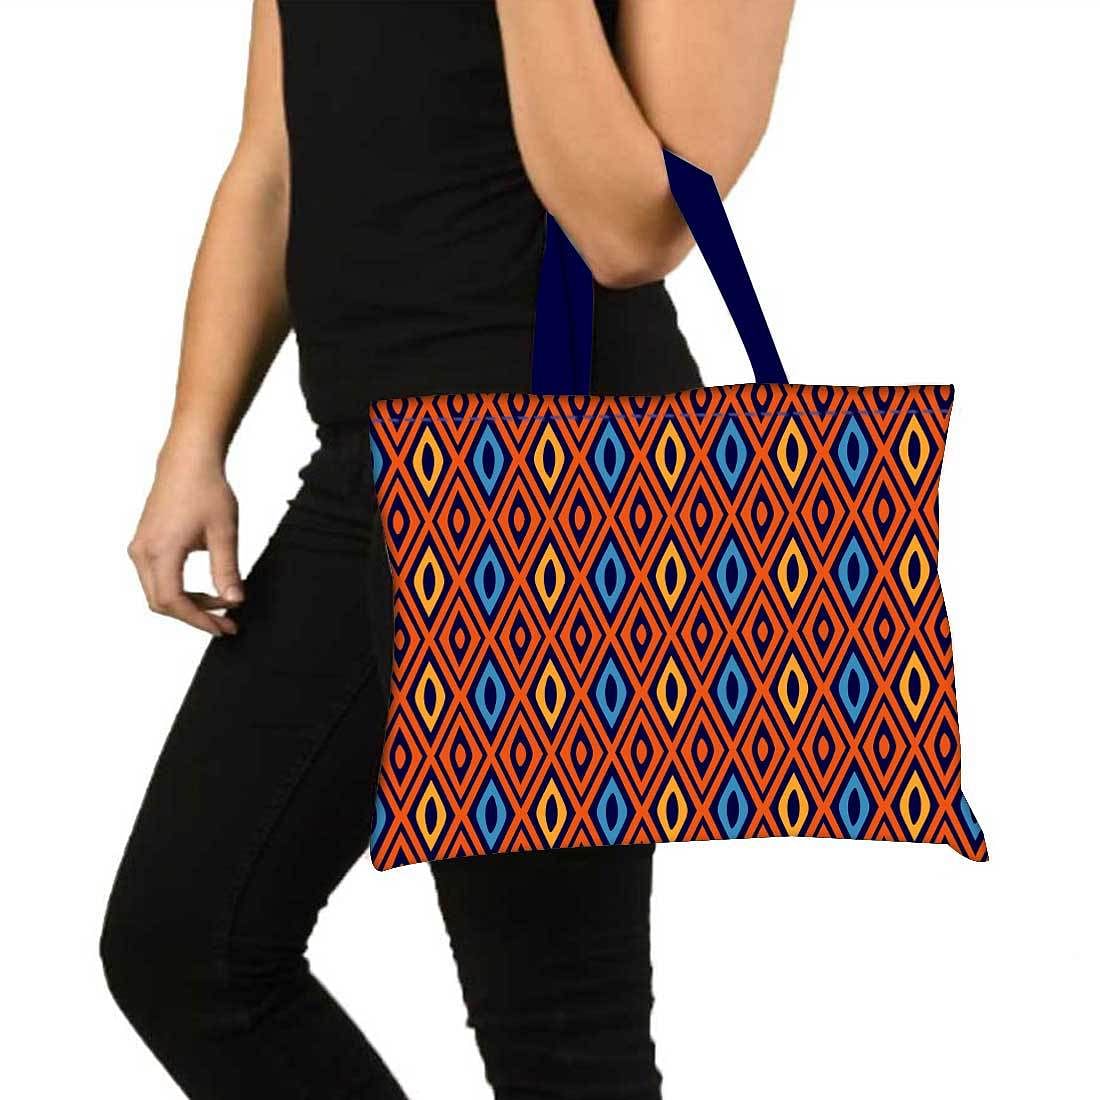 Buy Black Spade Women Black Office Geniune Tote Bag PU Leather Handbags  with Double Handle Ladies Purse at Amazon.in